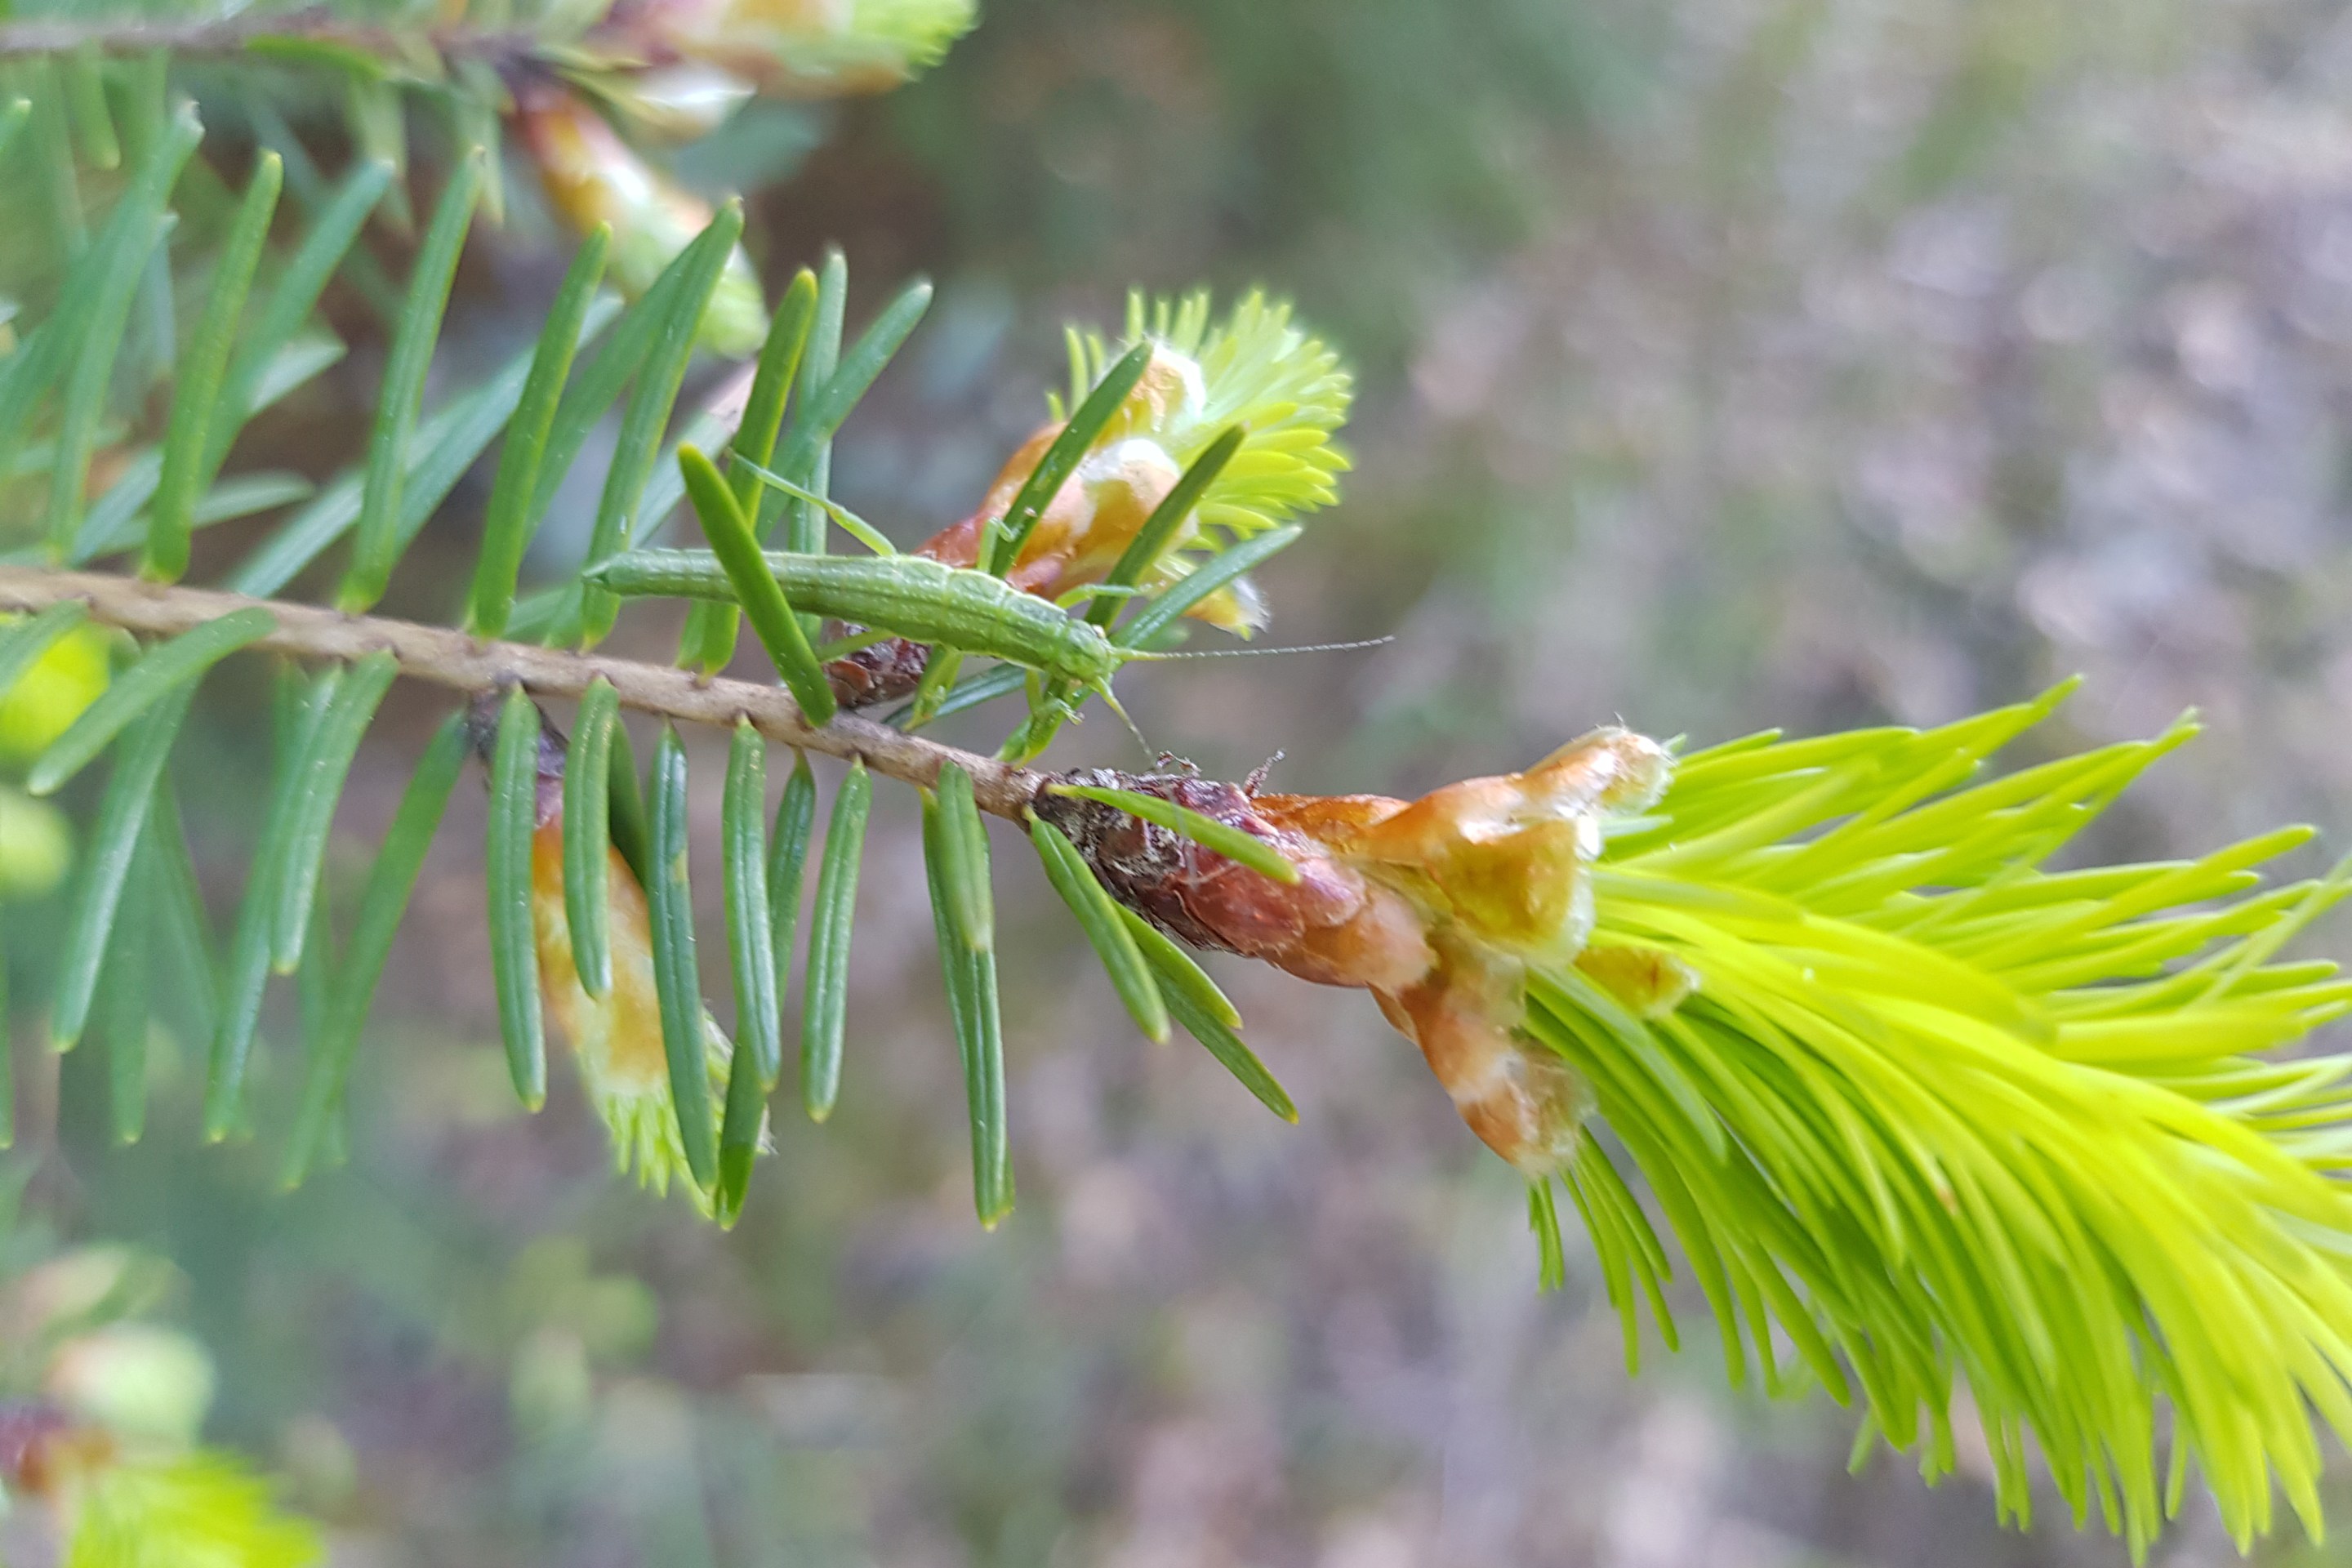 A Timema douglasi stick insect on a Douglas fir